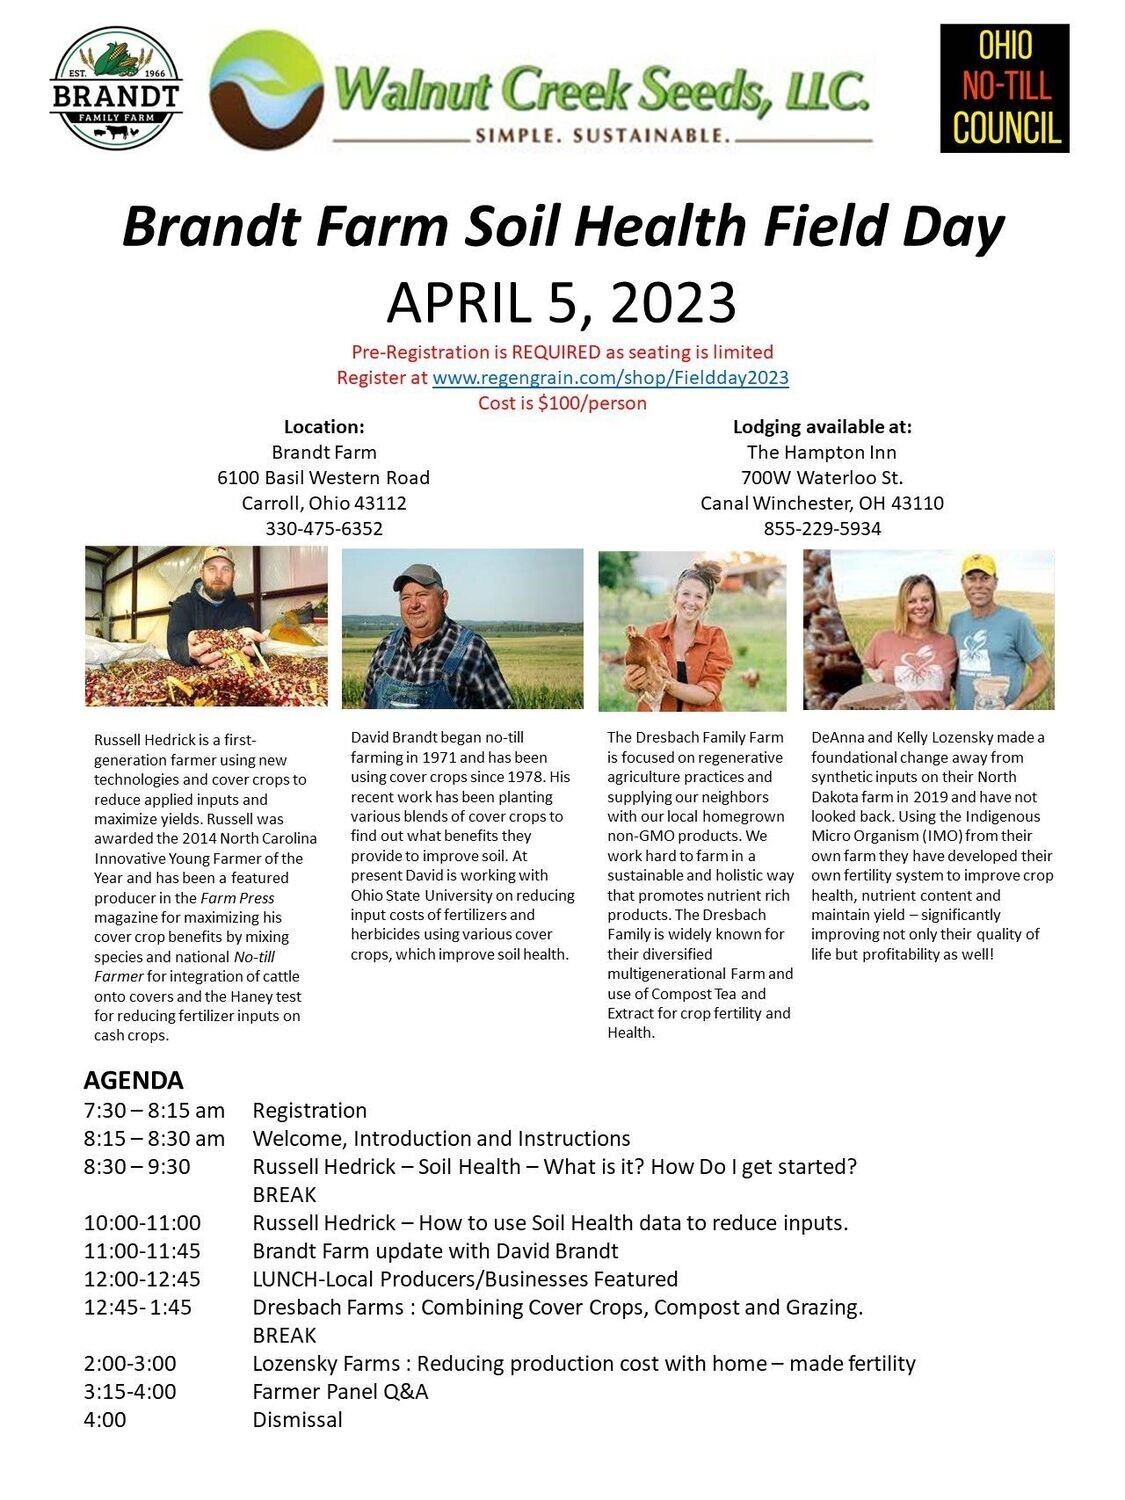 Brandt Farm 2023 Soil Health Field Day